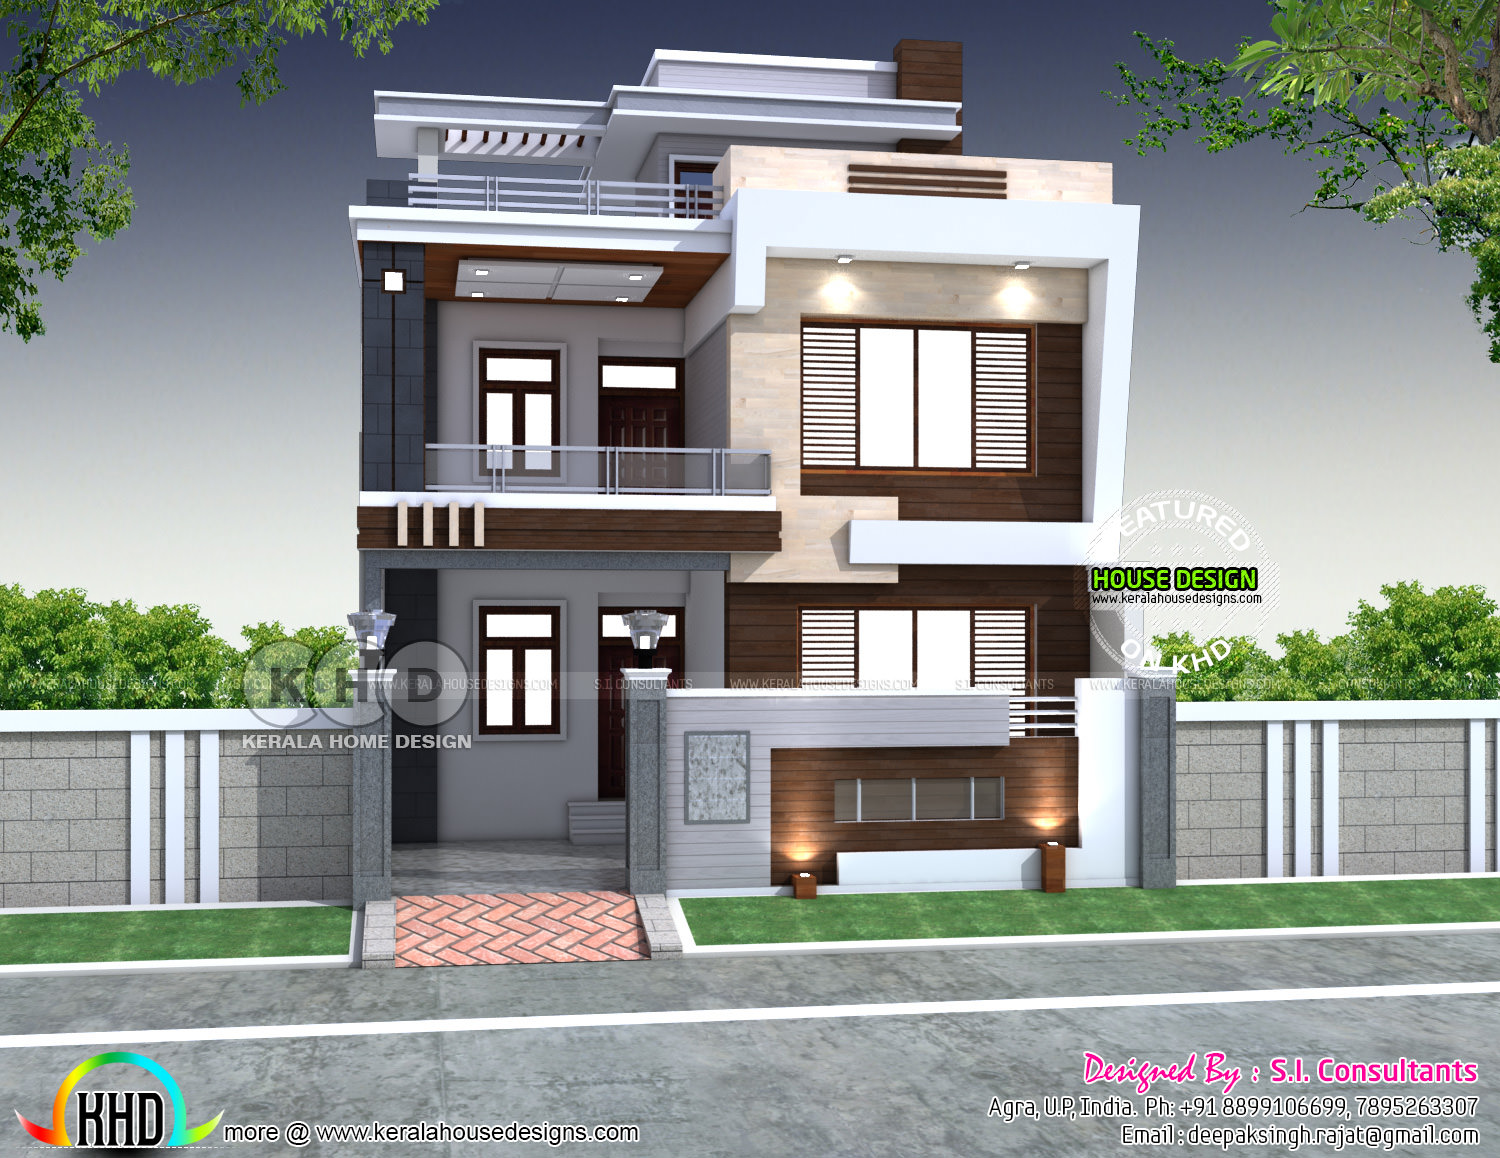 28 x 60 modern Indian  house  plan  Kerala home  design 